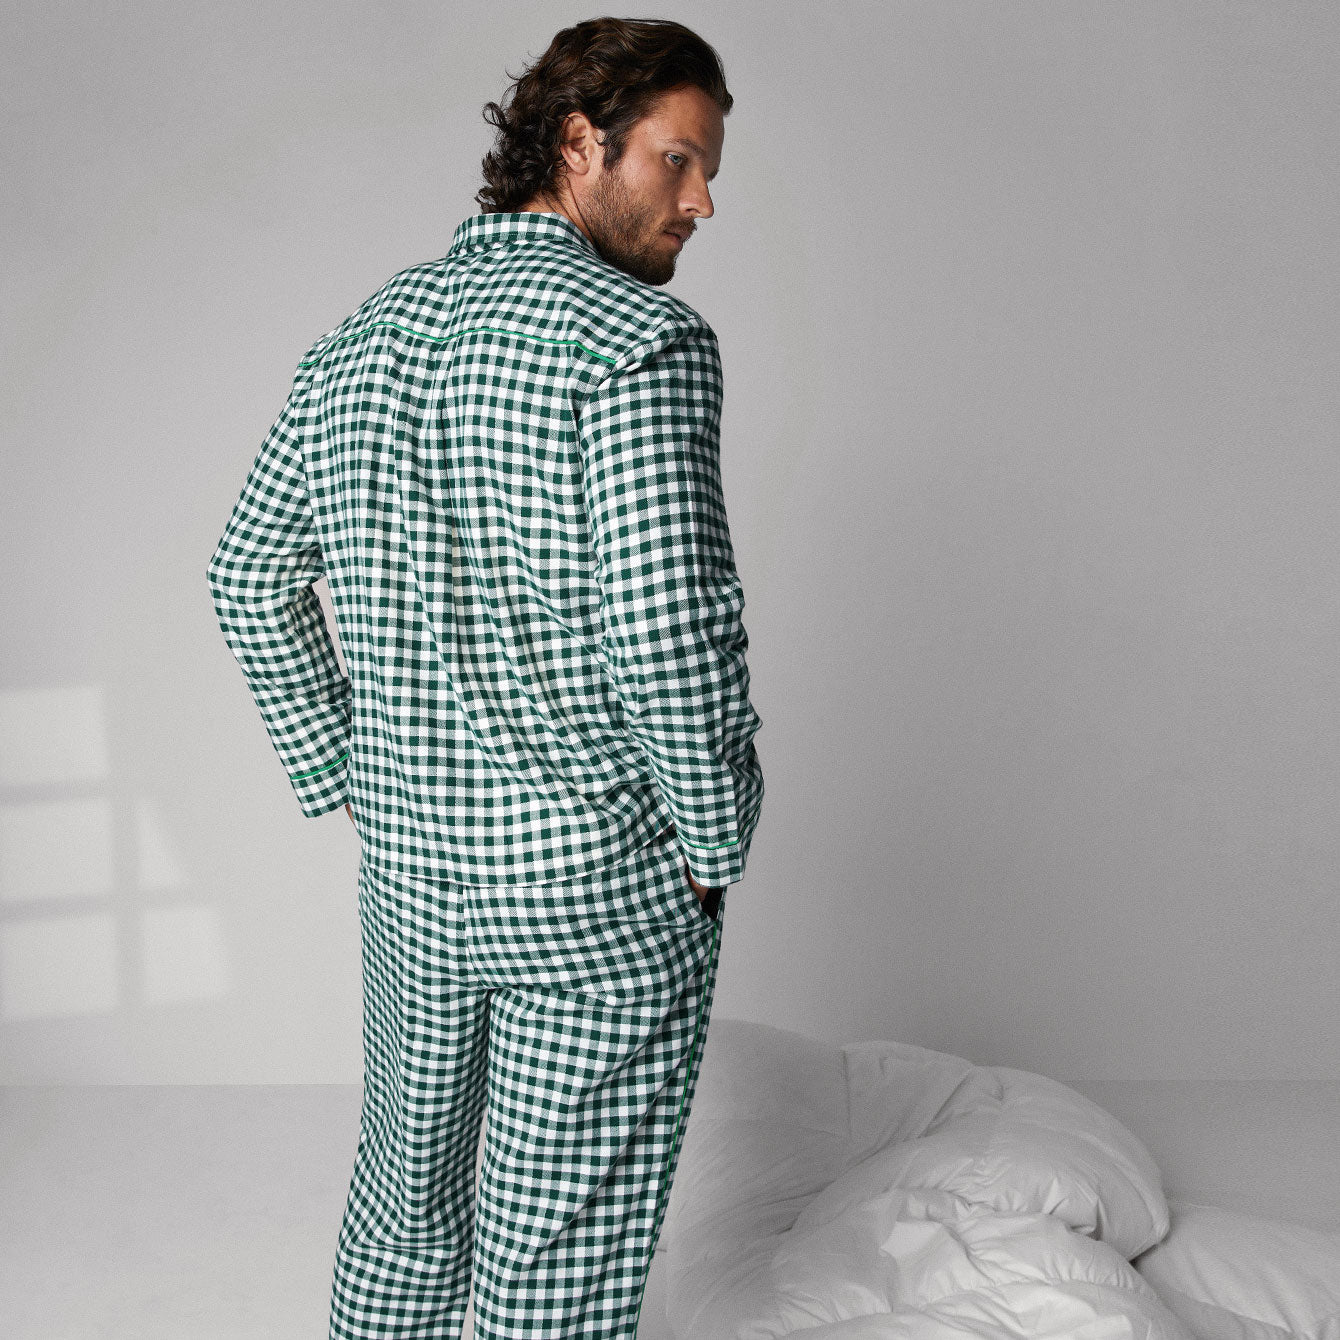 Pyjamas - Blue/Green Check (brushed)